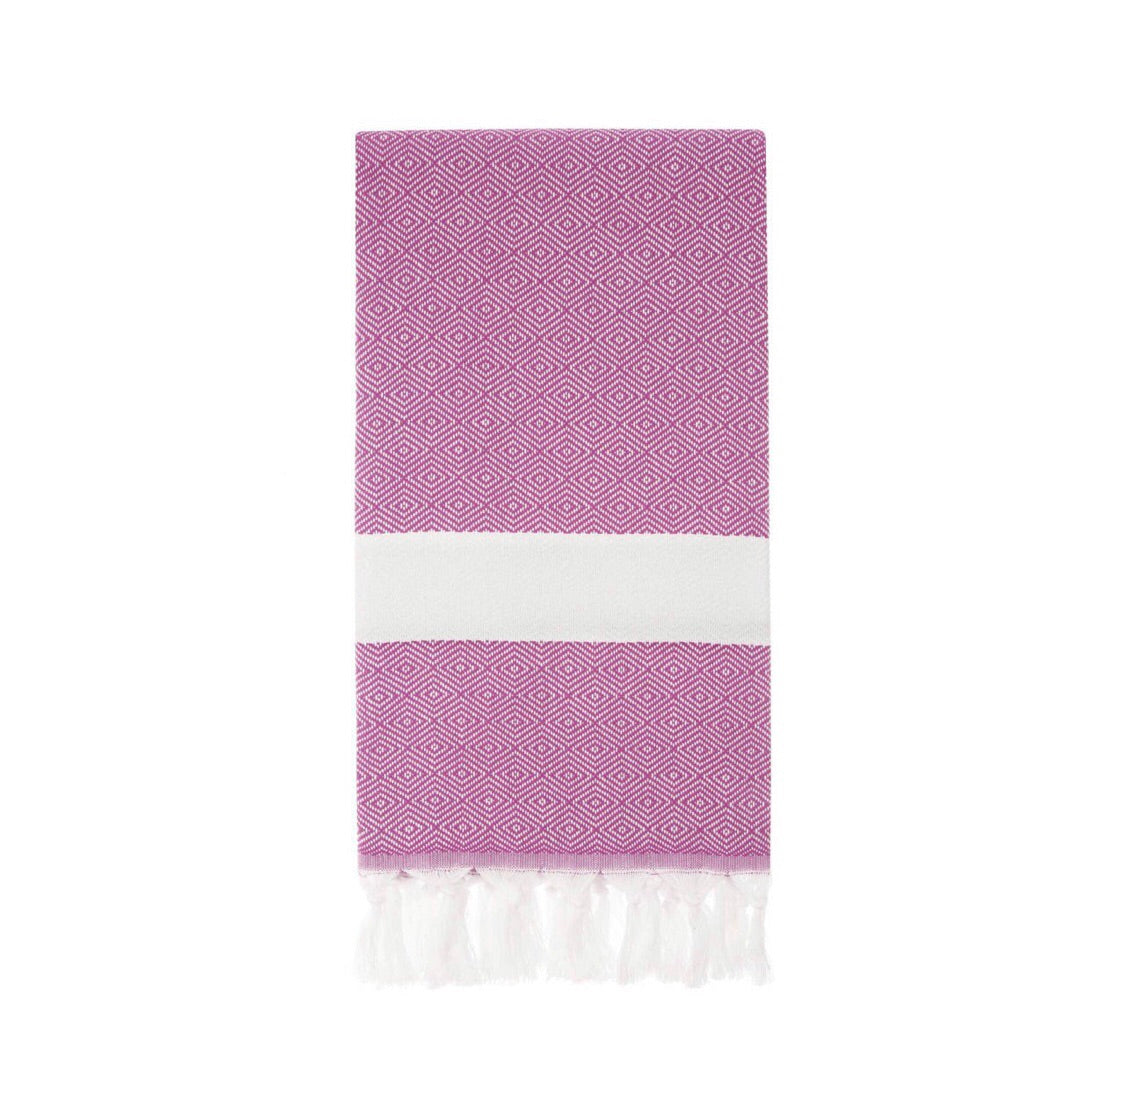 Diamond pattern Turkish towel for beach or bath in lilac